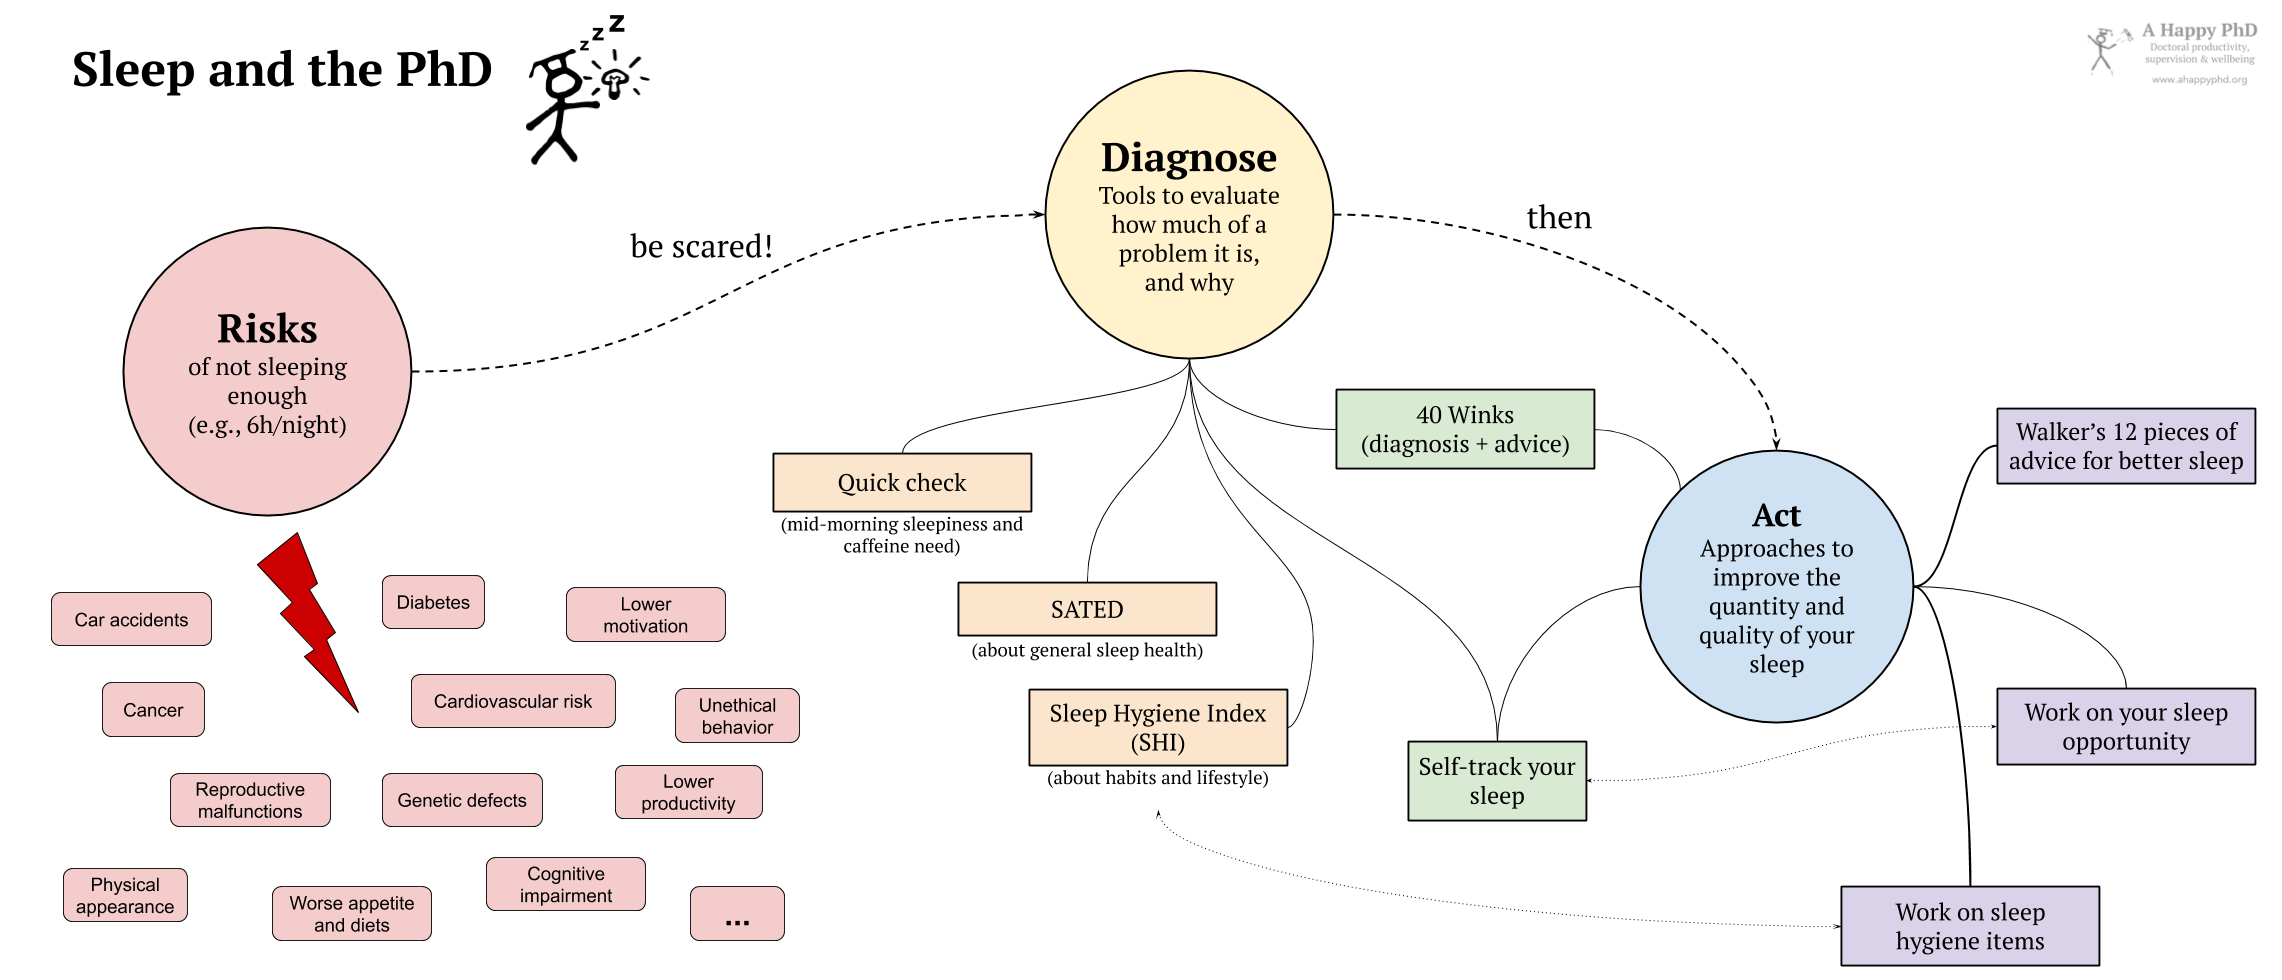 Diagram summarizing the main risks, diagnosis and action